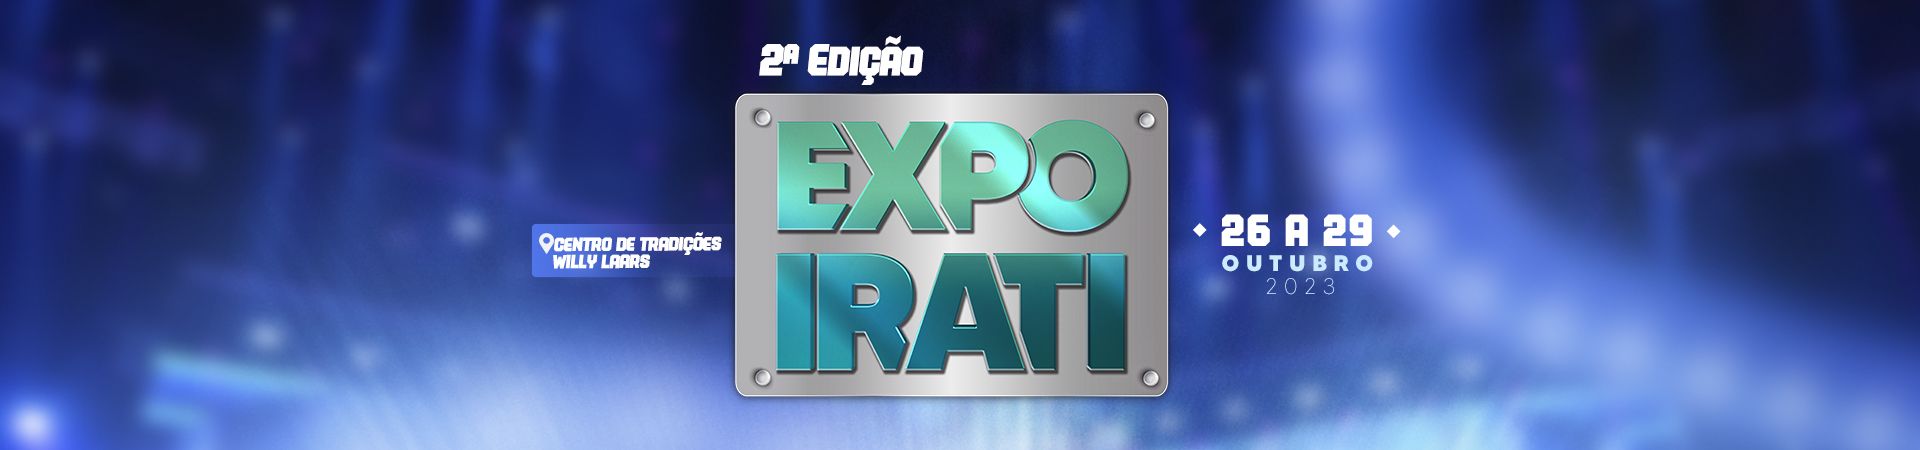 Expo Irati